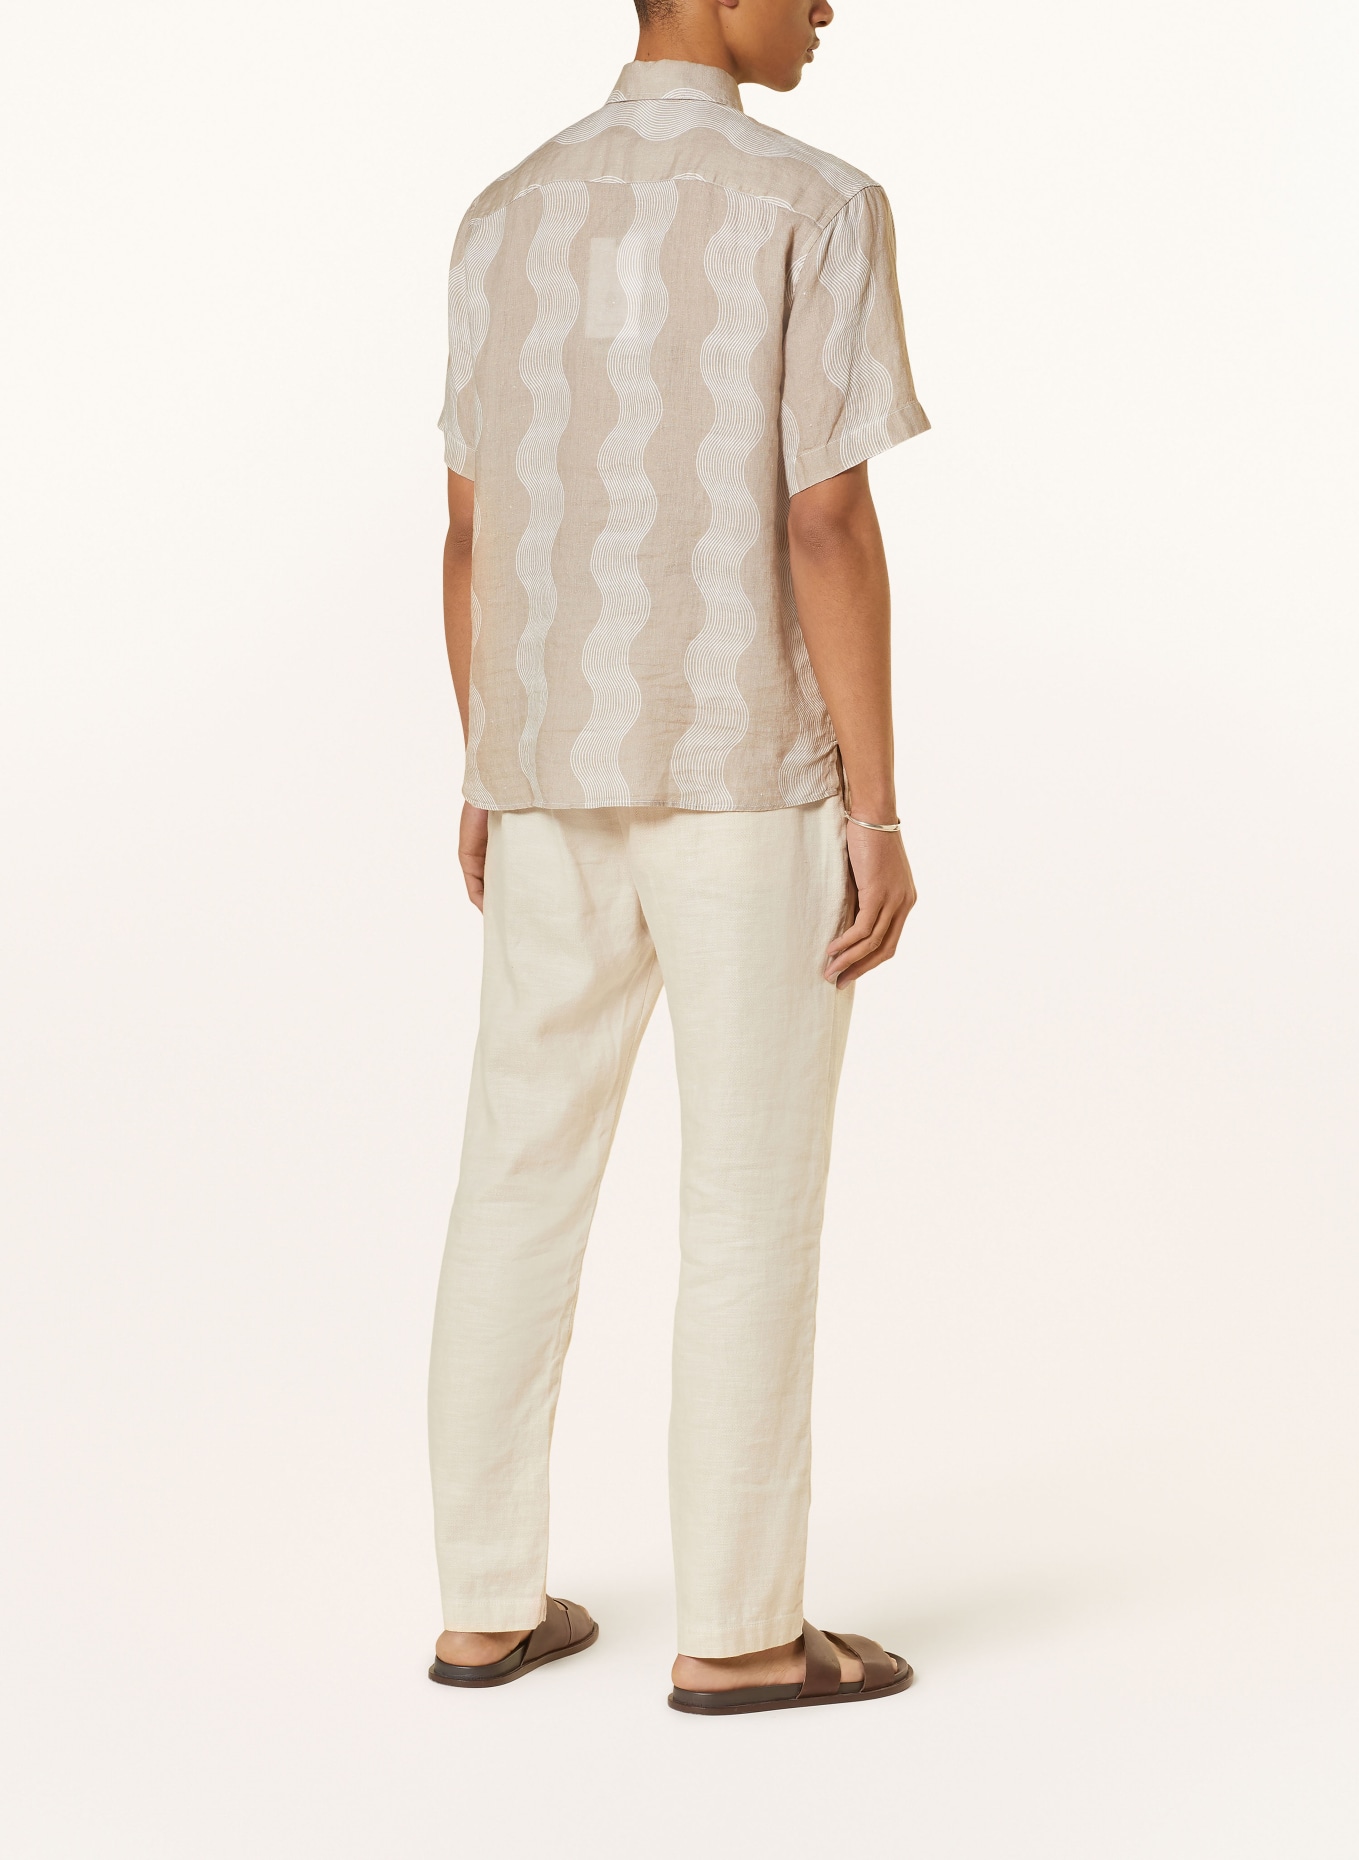 FRESCOBOL CARIOCA Short sleeve shirt CASTRO CABANA comfort fit in linen, Color: 759 Truffle (Image 3)